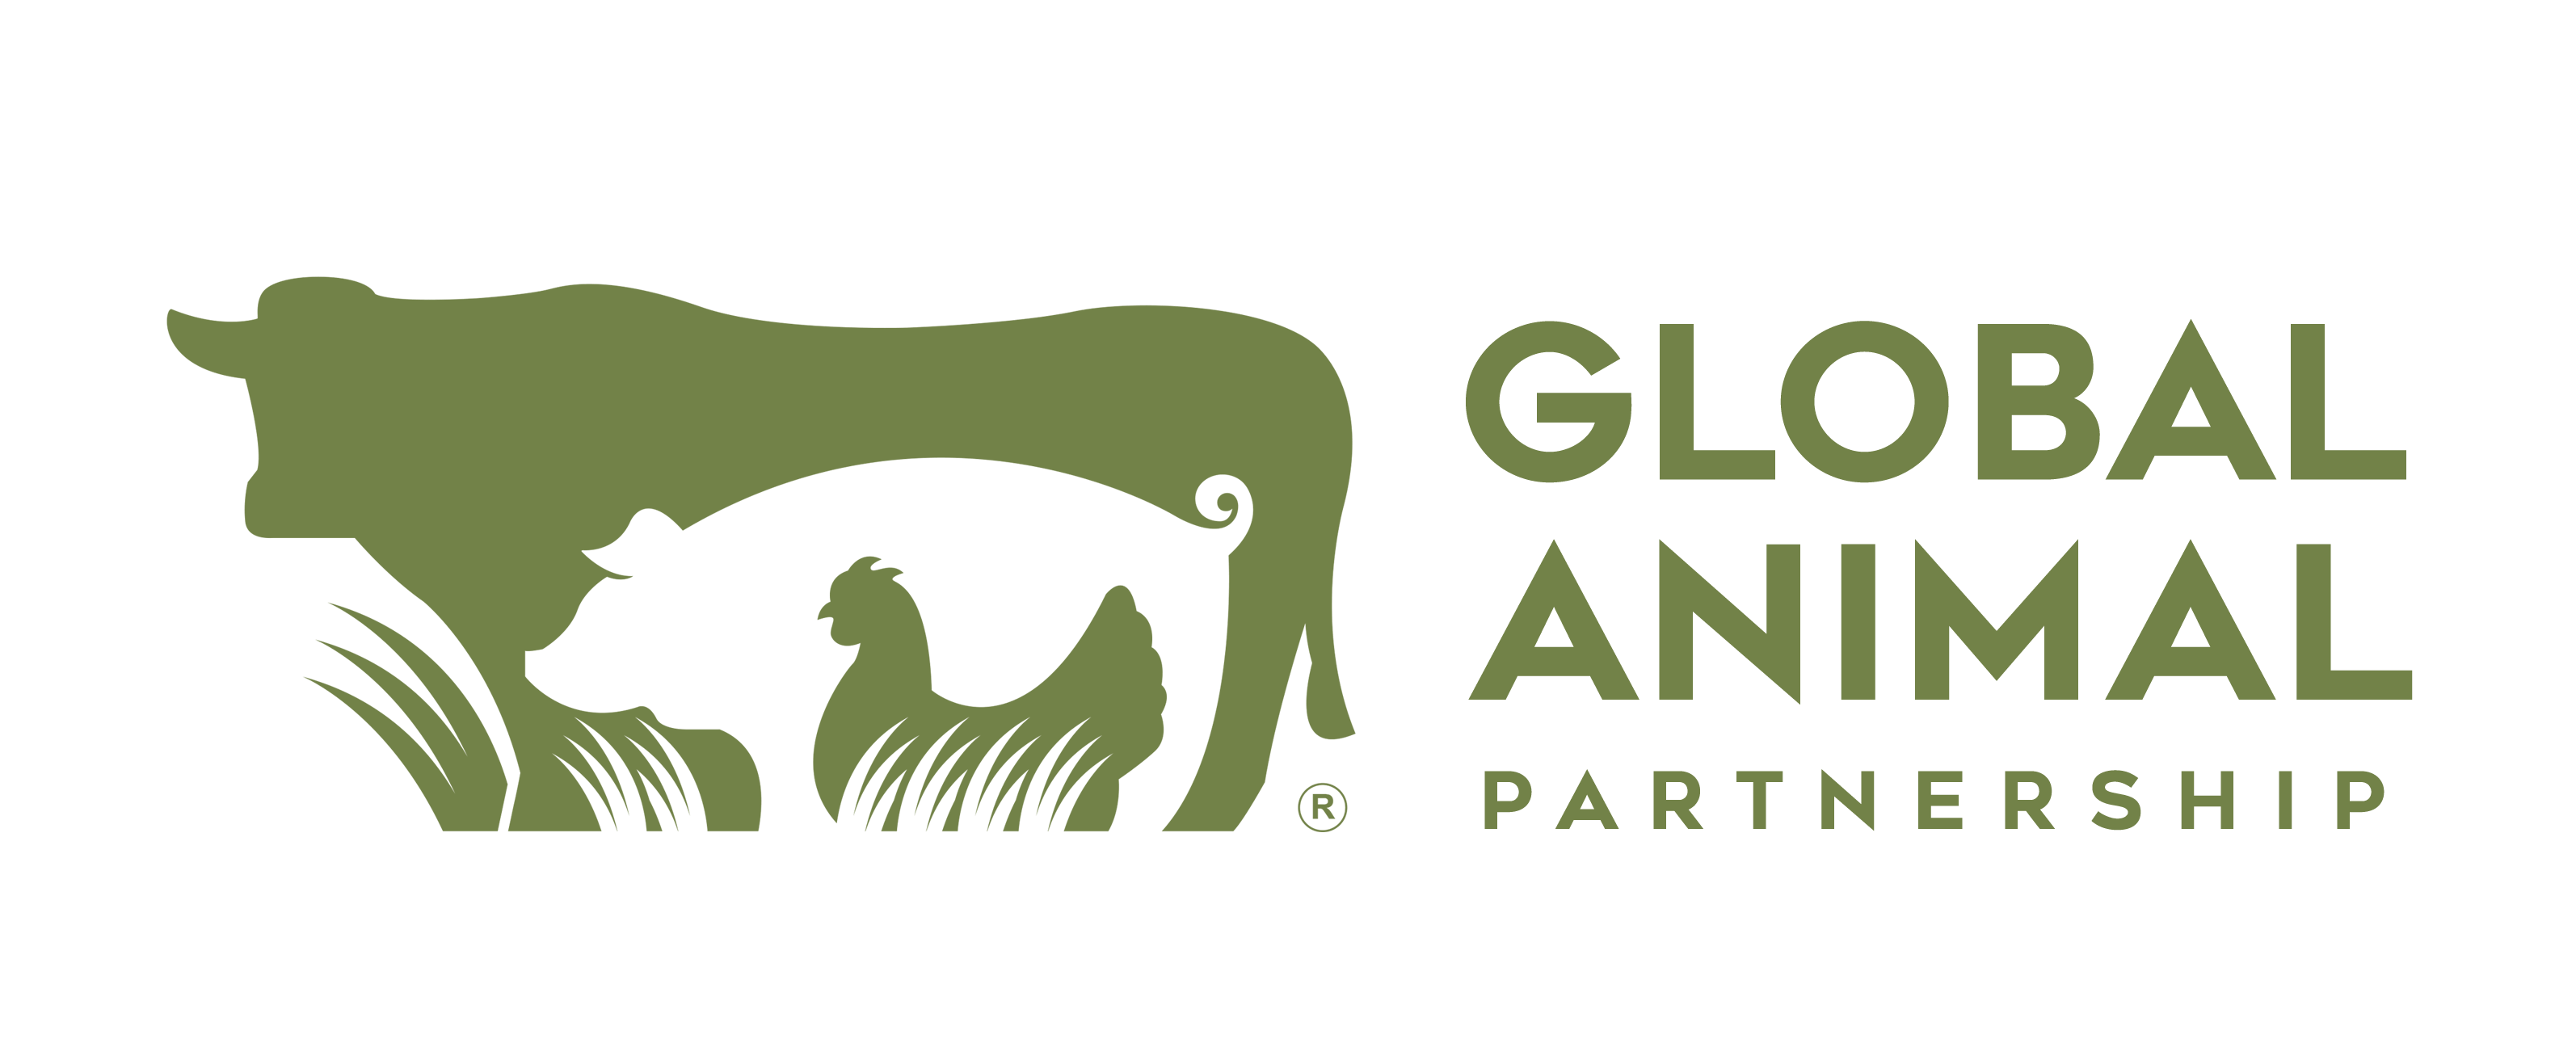 Winner Image - Global Animal Partnership